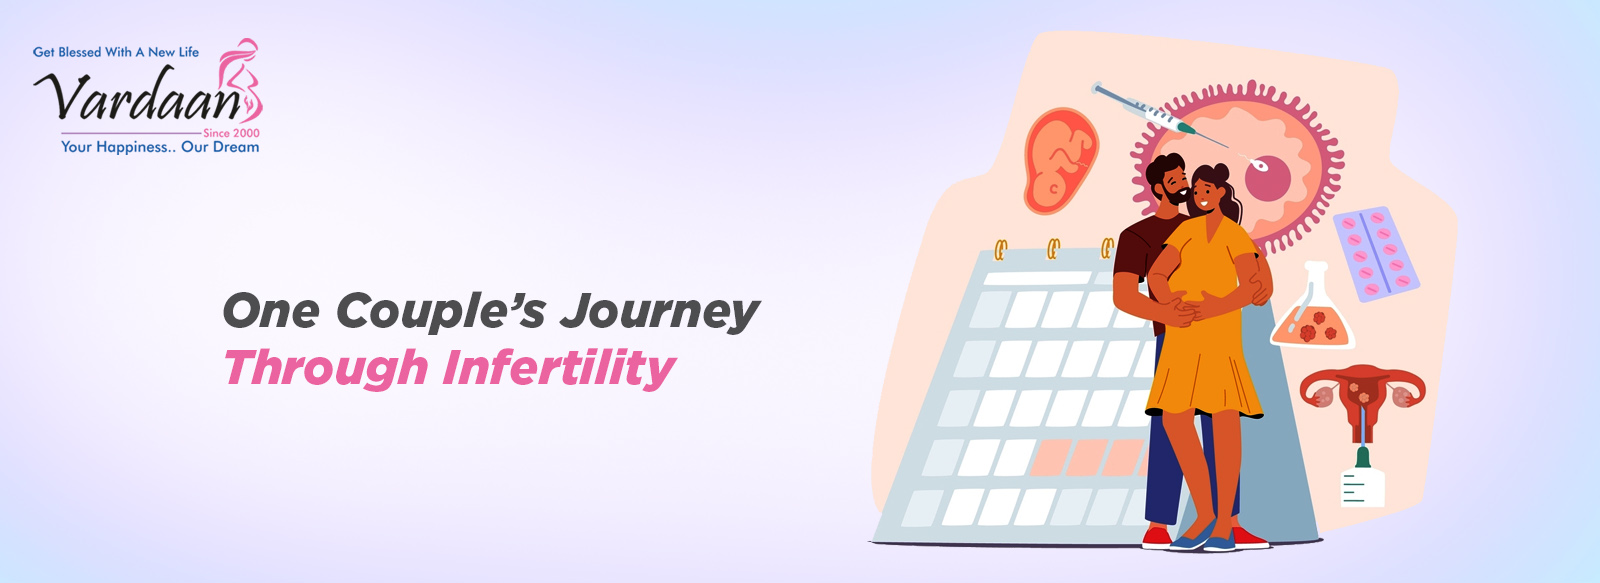 One Couple’s Journey Through Infertility